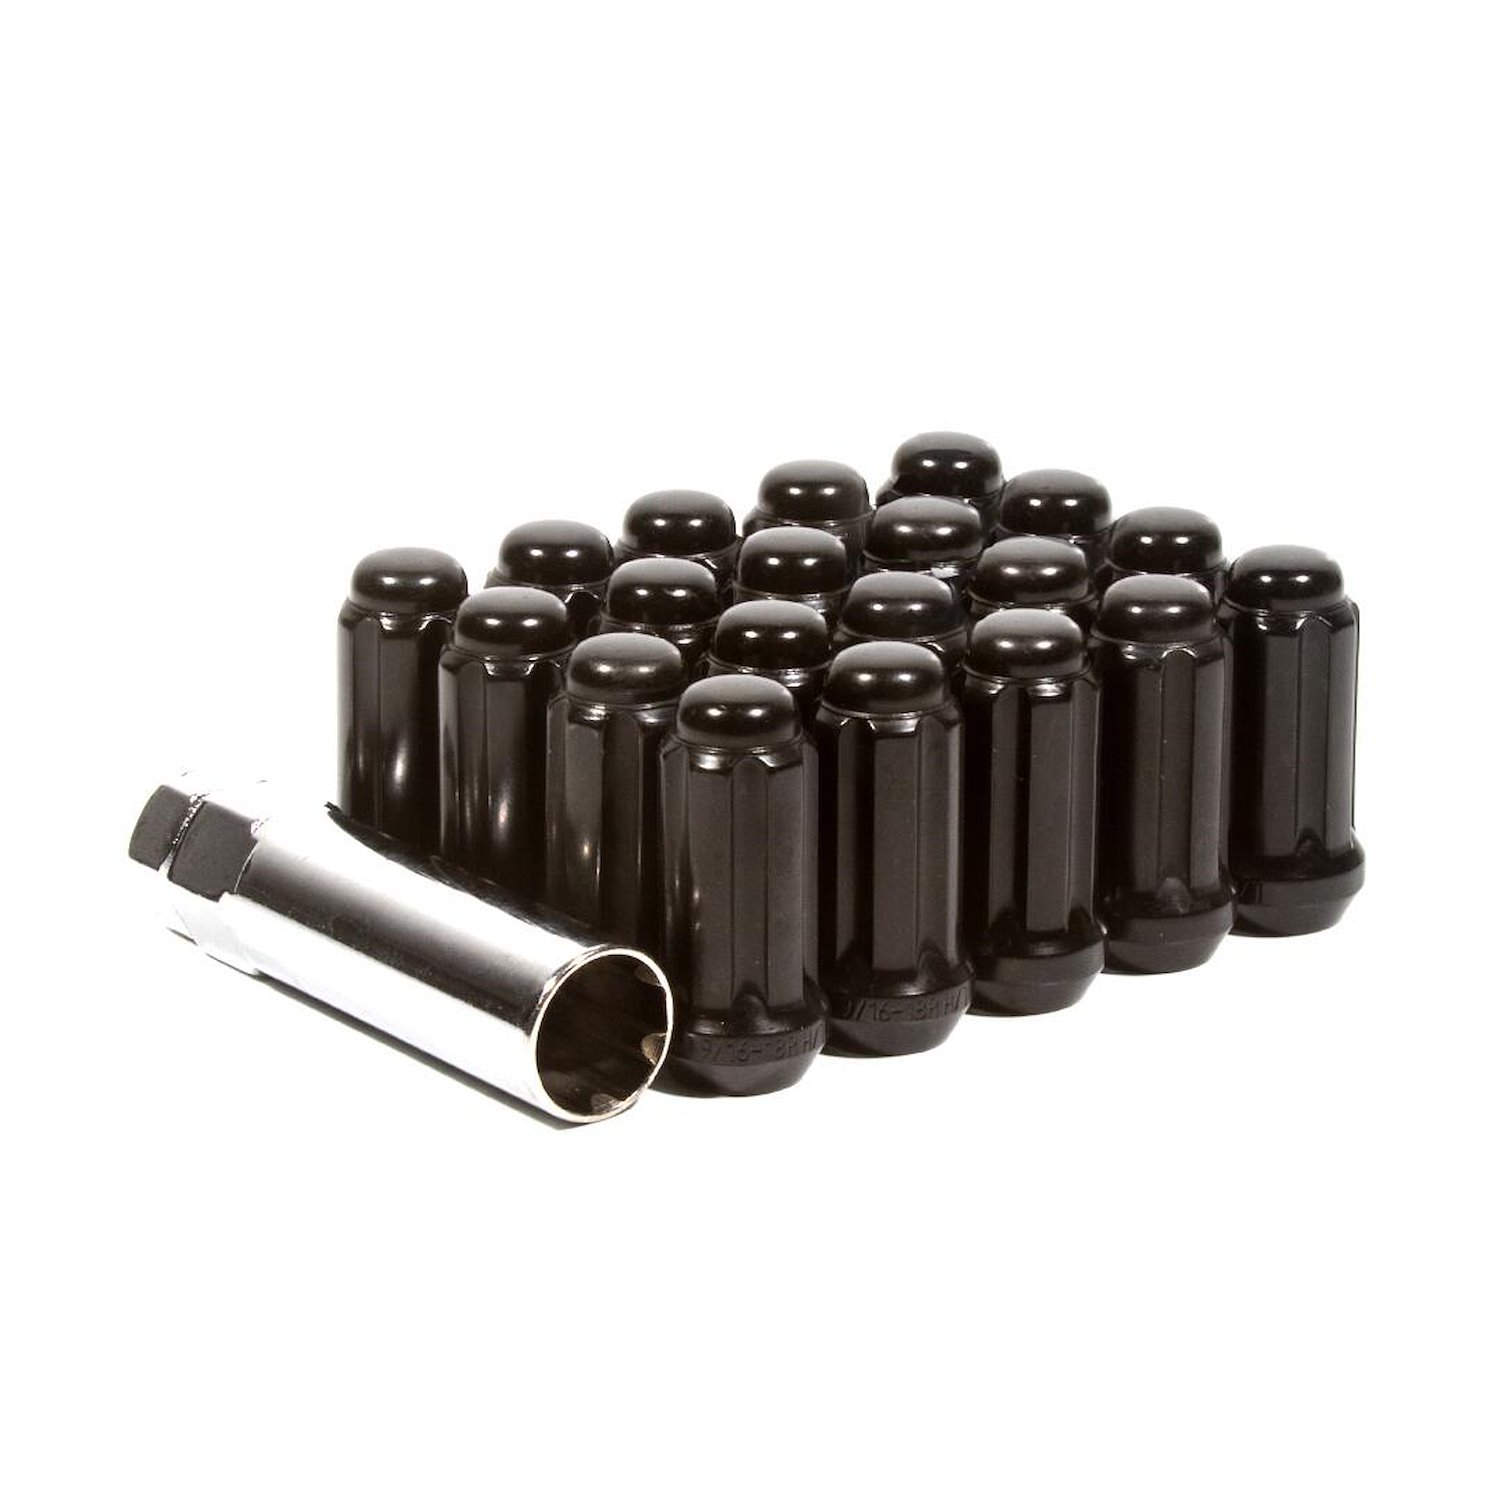 LK-W55125SB Lug Kit, Spline, M12X1.25, 5 Lug Kit, Black (Subaru), 20 Nuts